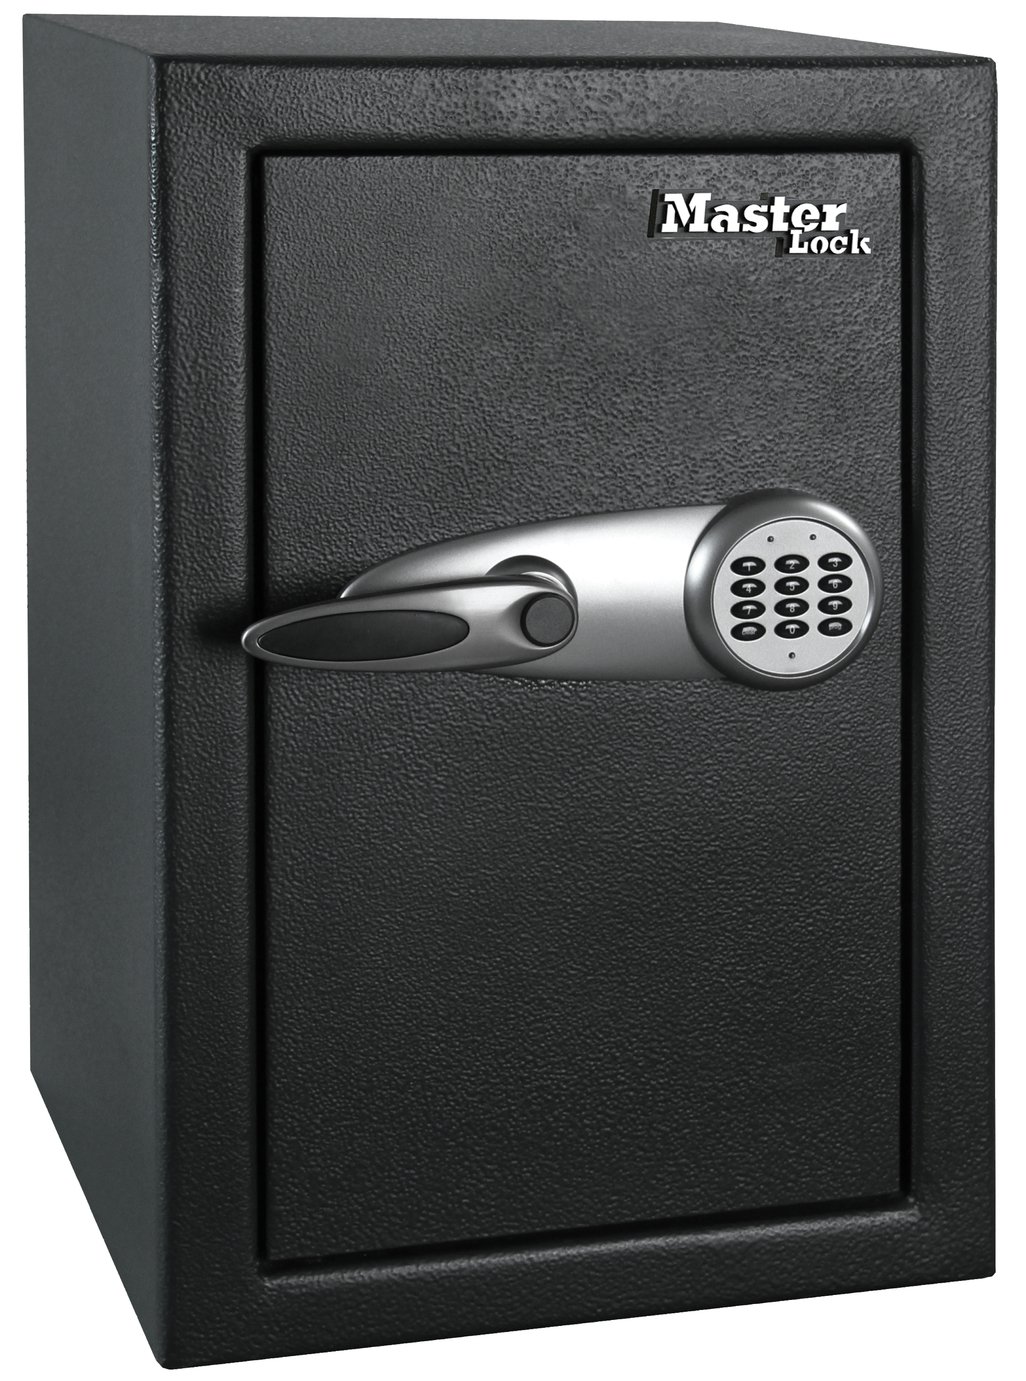 Master Lock Large High Security Safe